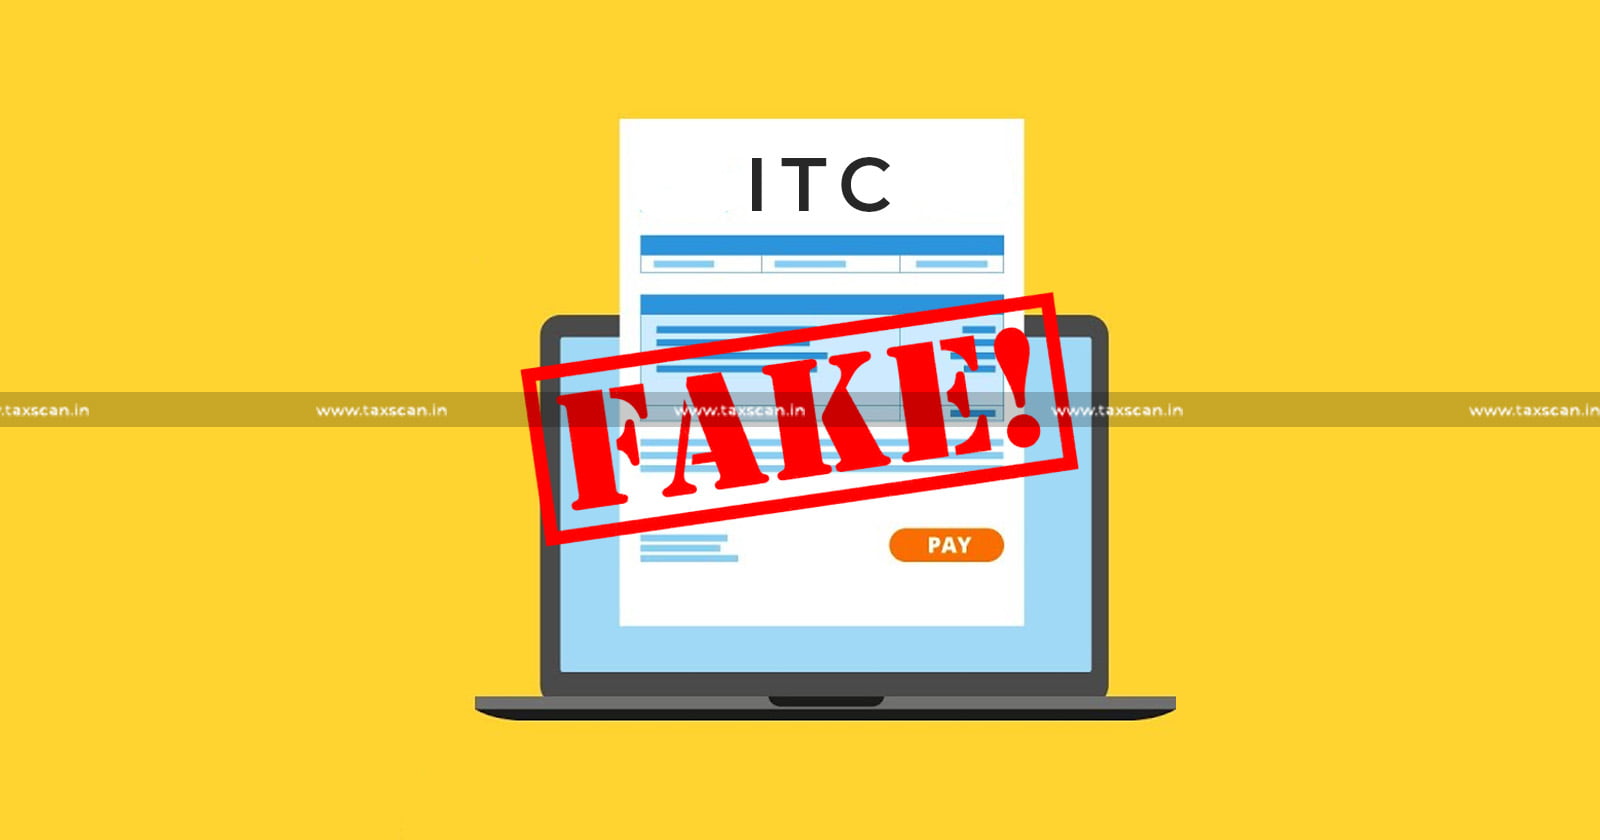 Fake Credit - Supplier - Reject GST ITC Refund Claims - GST - GST ITC Refund - ITC Refund - Refund Claims - Delhi High Court - Taxscan